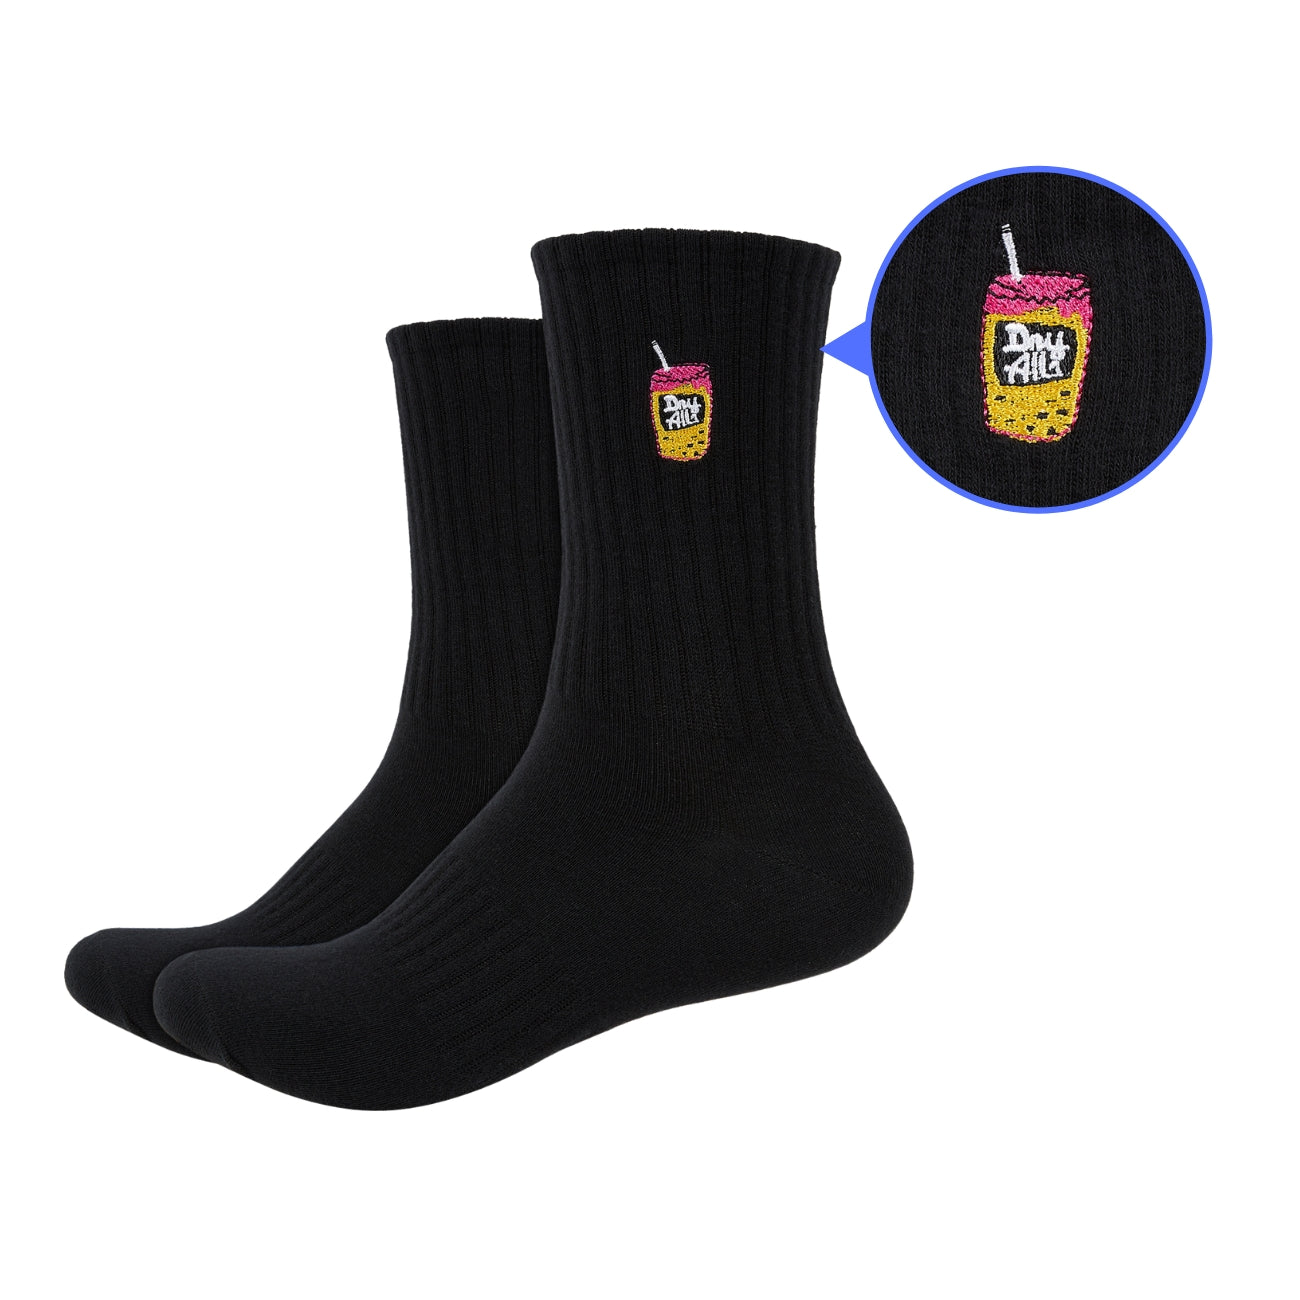 Mens Plain Crew Length Socks with Snacks Patch - IDENTITY Apparel Shop